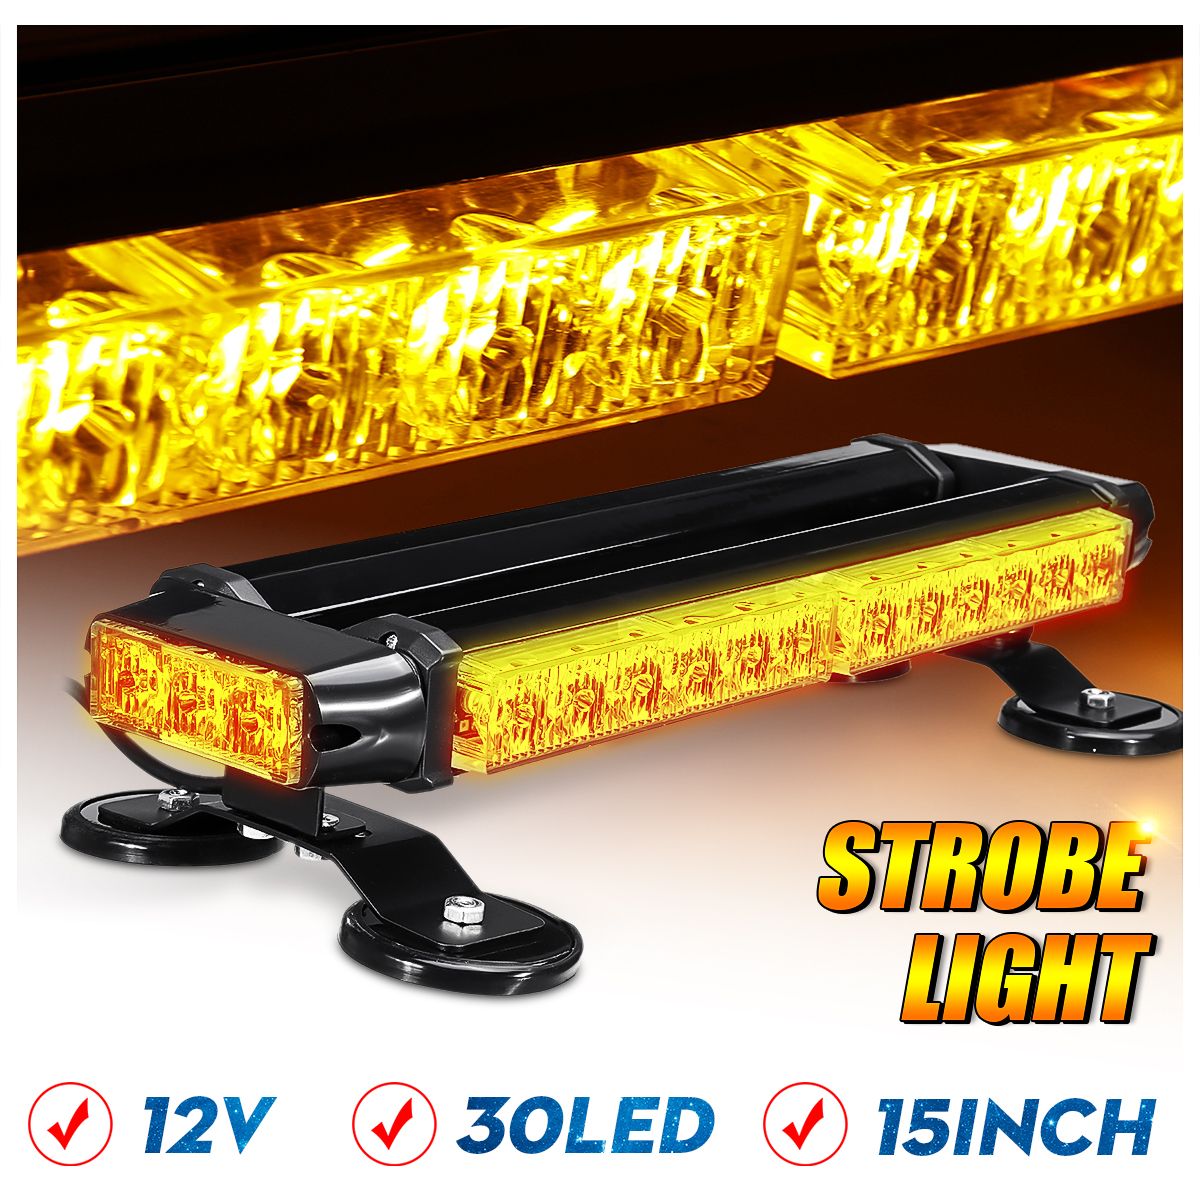 12V-30W-Car-LED-Roof-Strobe-Light-Bar-Emergency-Signal-Warning-Flash-Amber-Magnetic-7-Modes-Universa-1587030